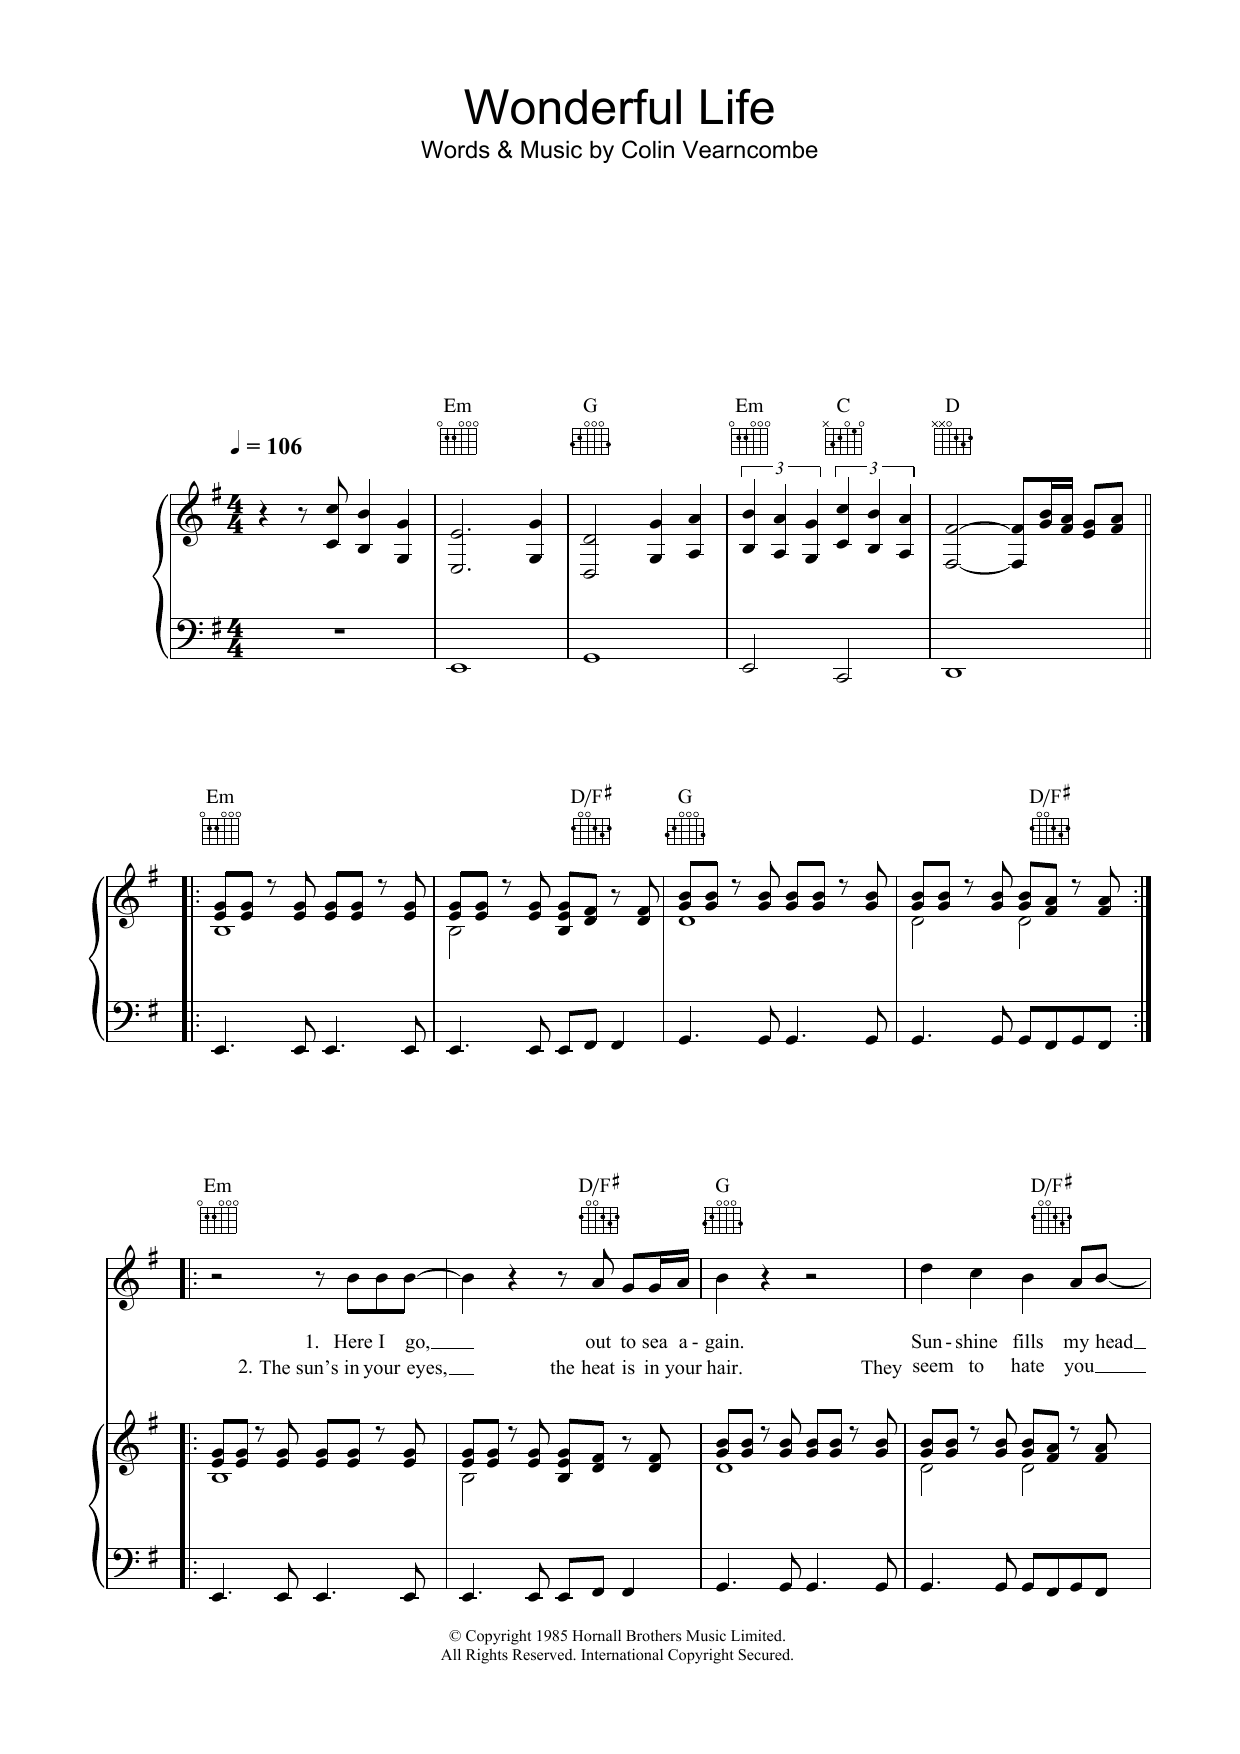 Black Wonderful Life Sheet Music Notes & Chords for Clarinet - Download or Print PDF